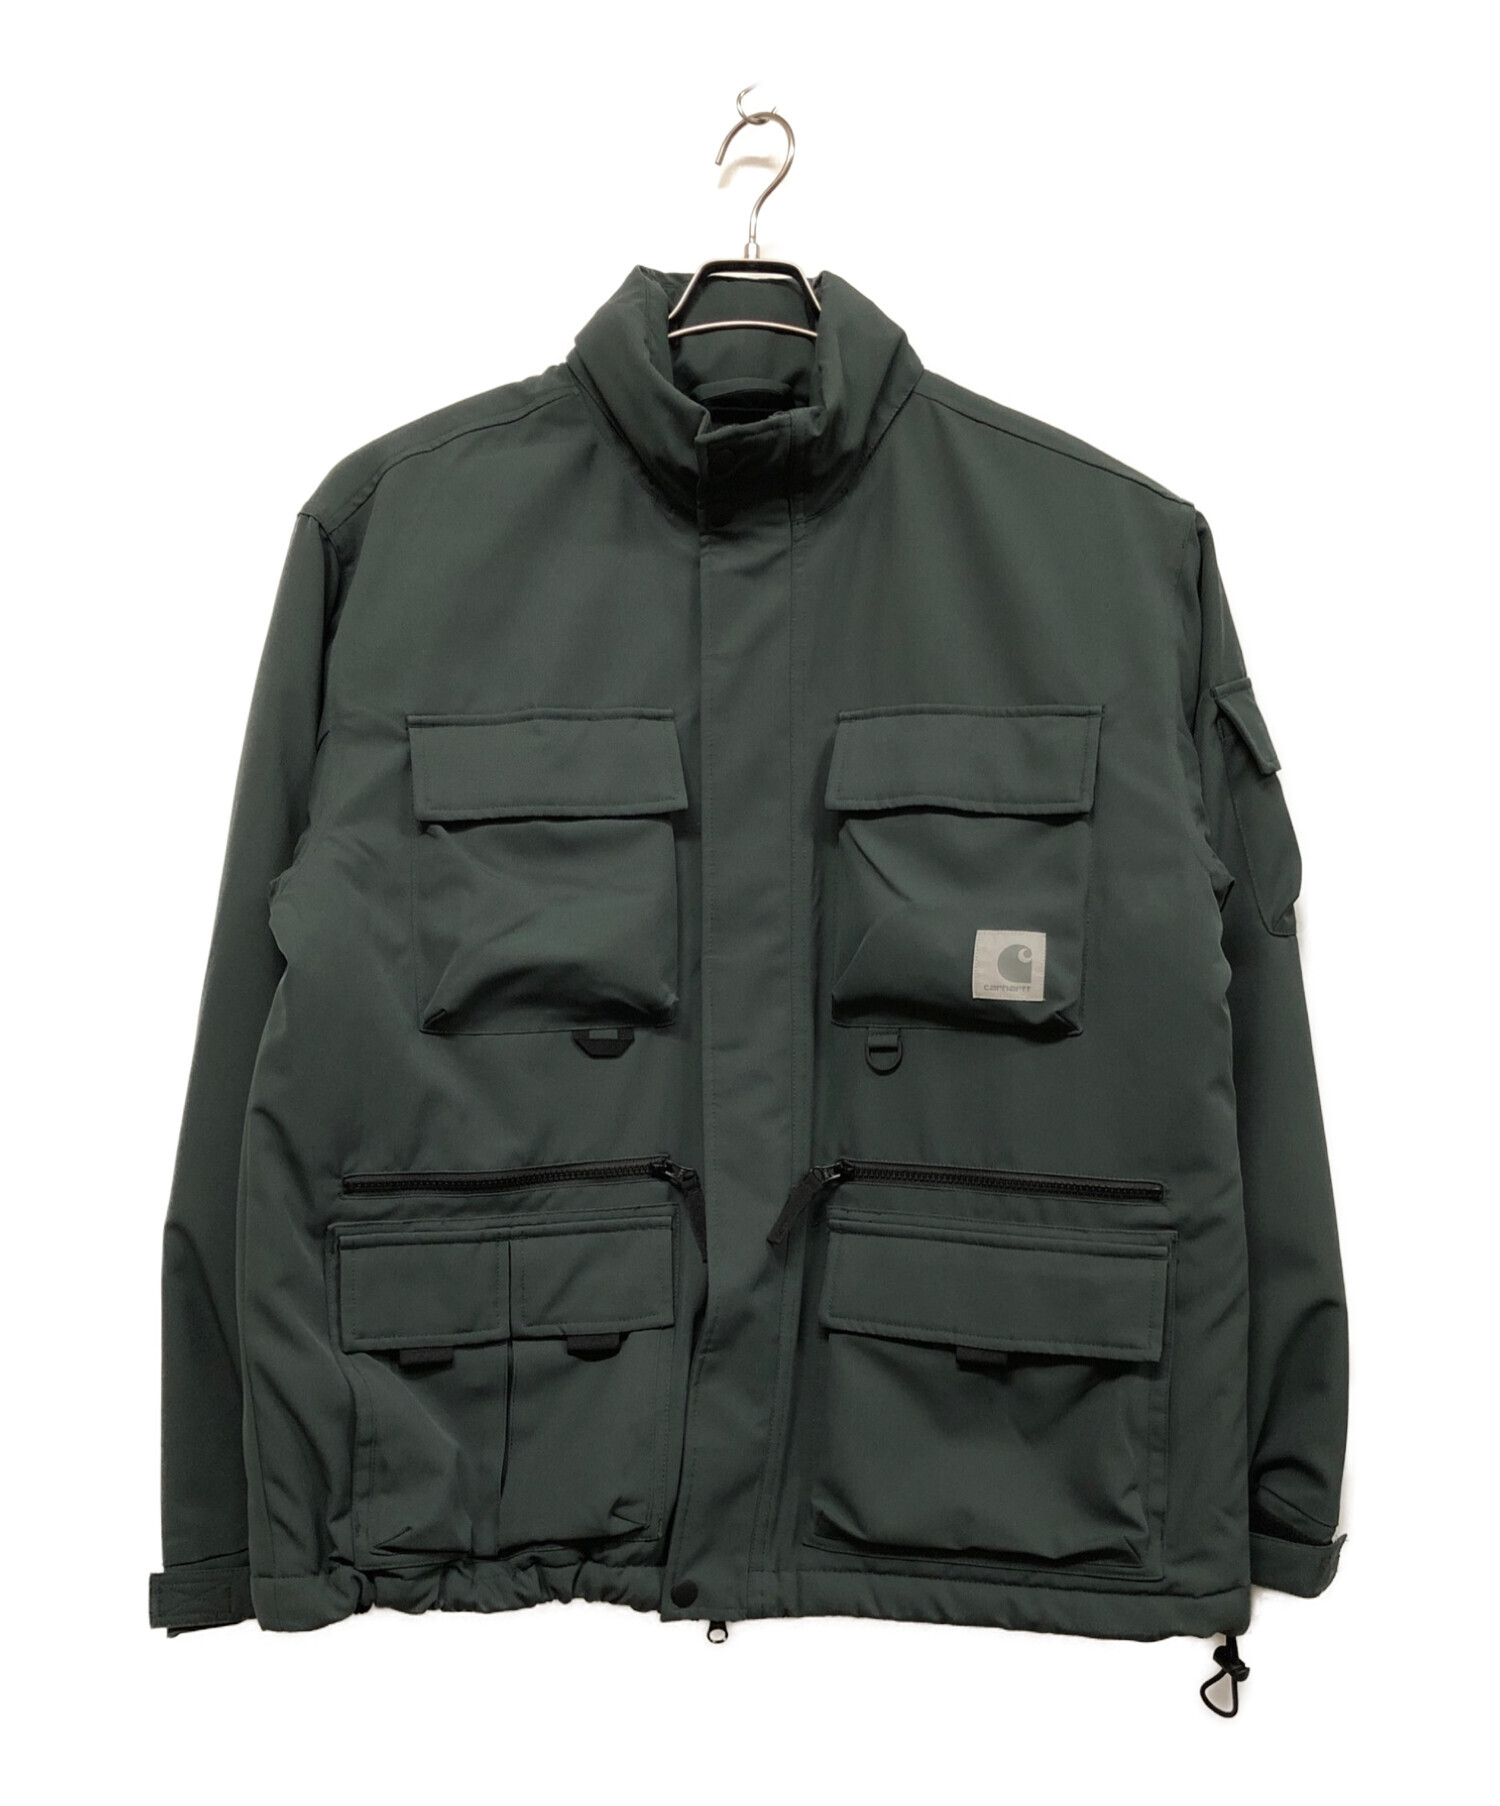 Carhartt WIP (カーハートダブリューアイピー) colewood jacket グリーン サイズ:L